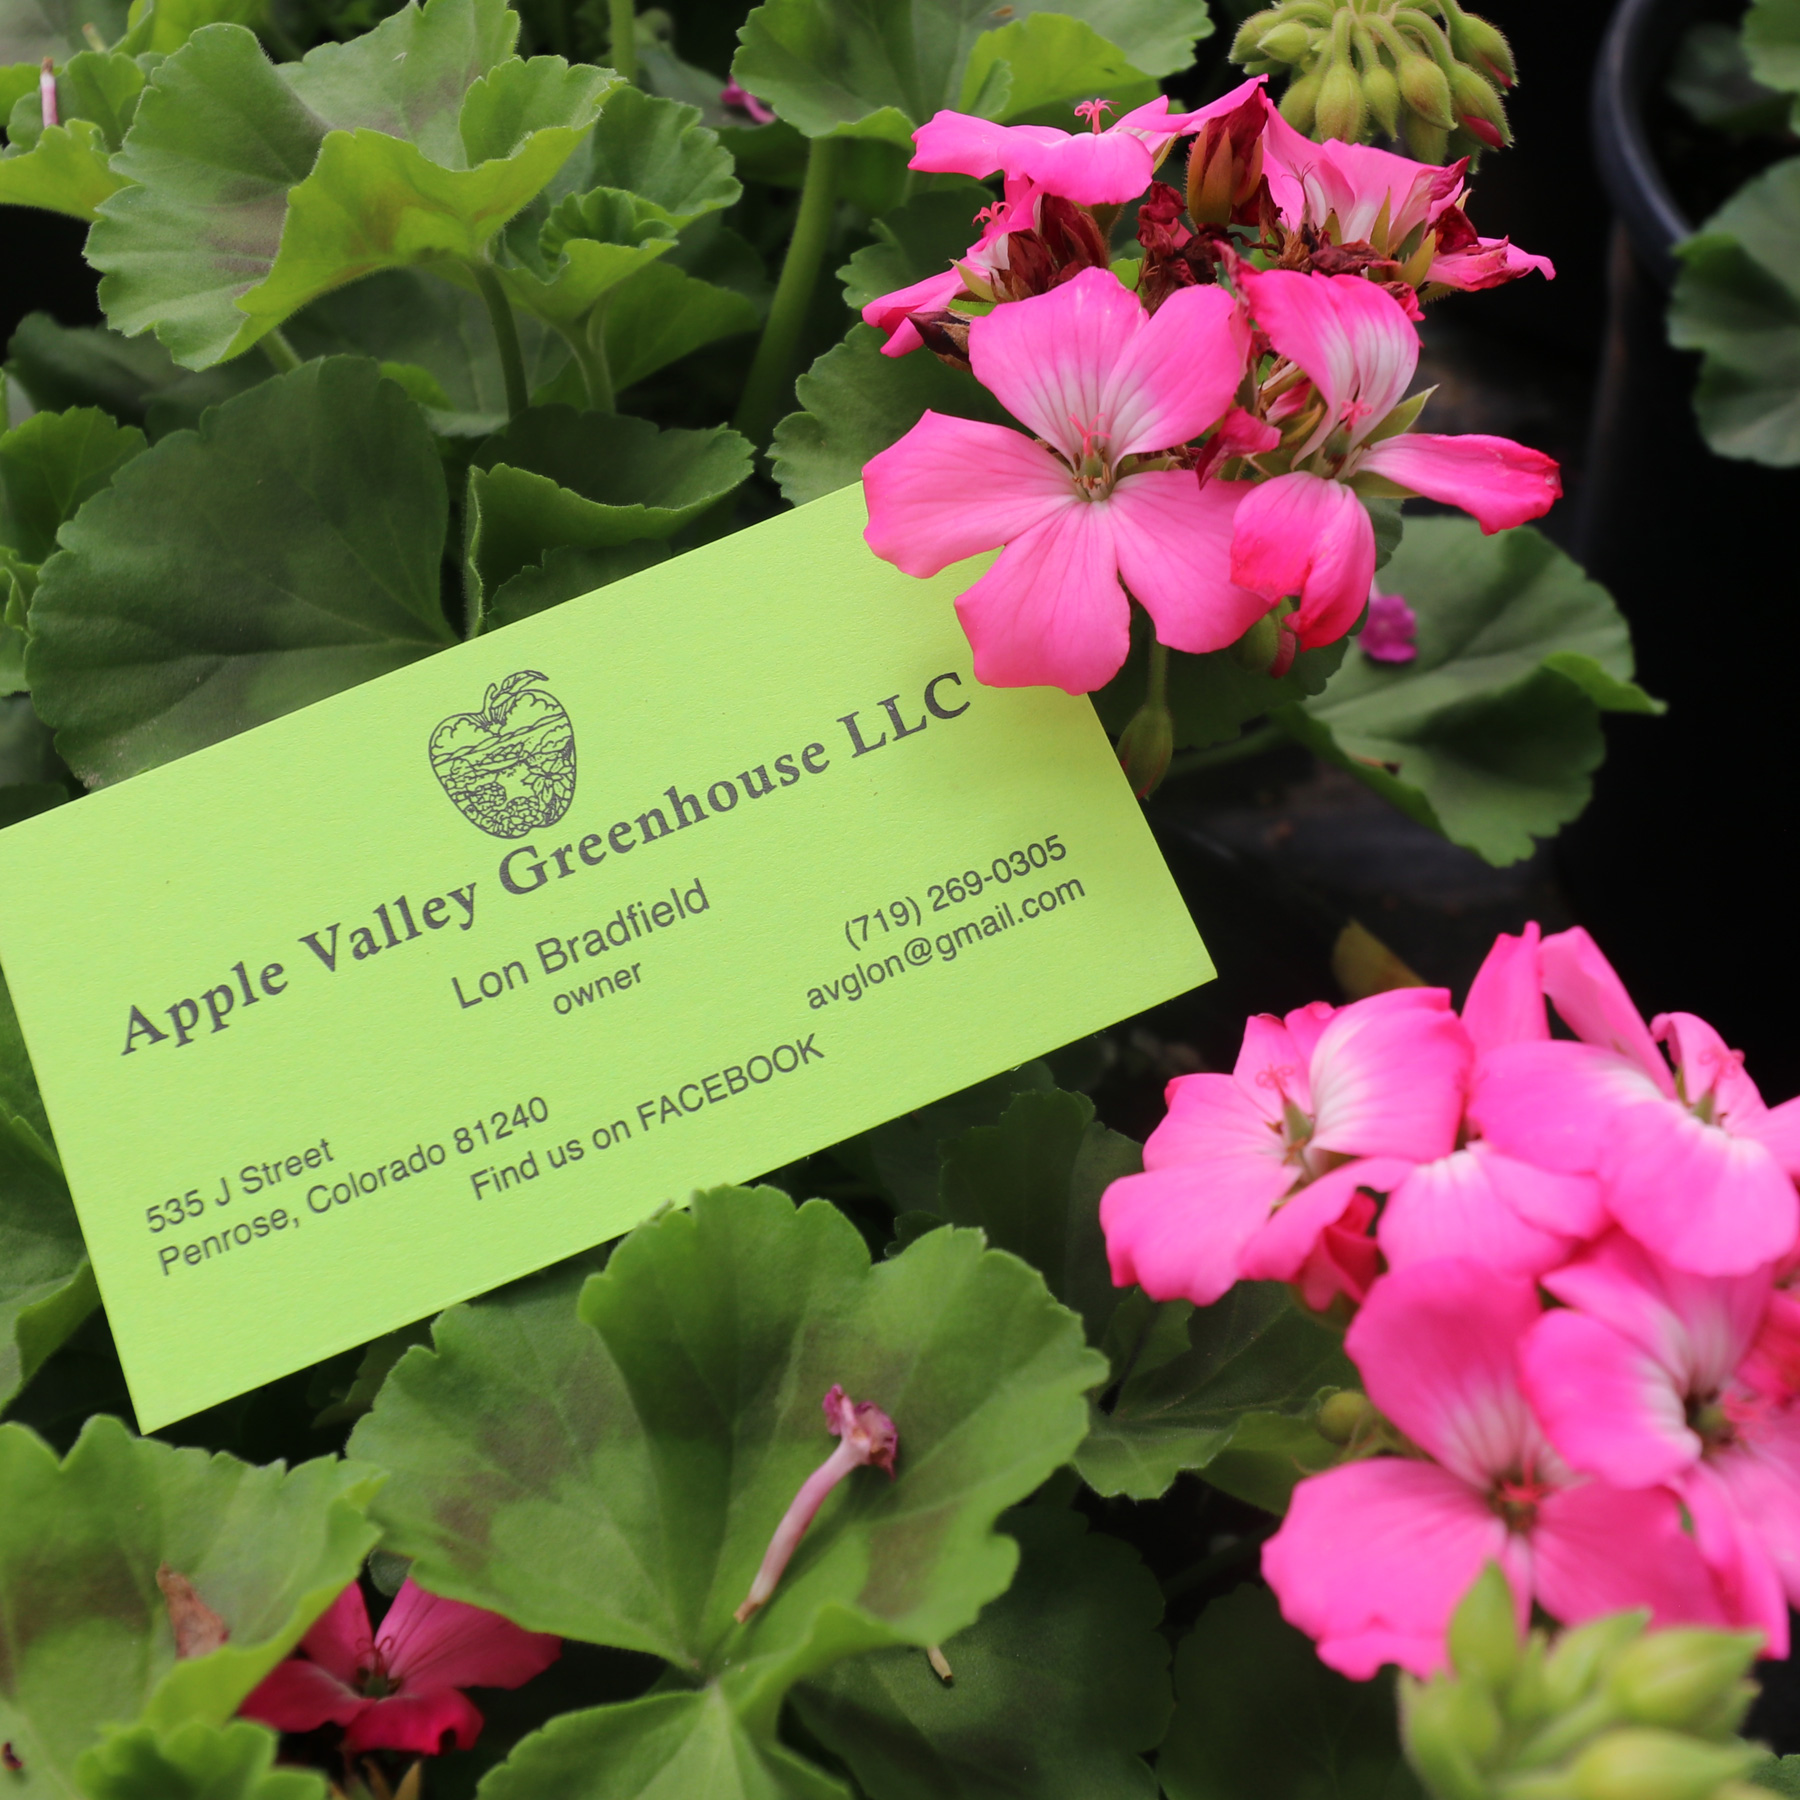 Apple Valley Greenhouse LLC